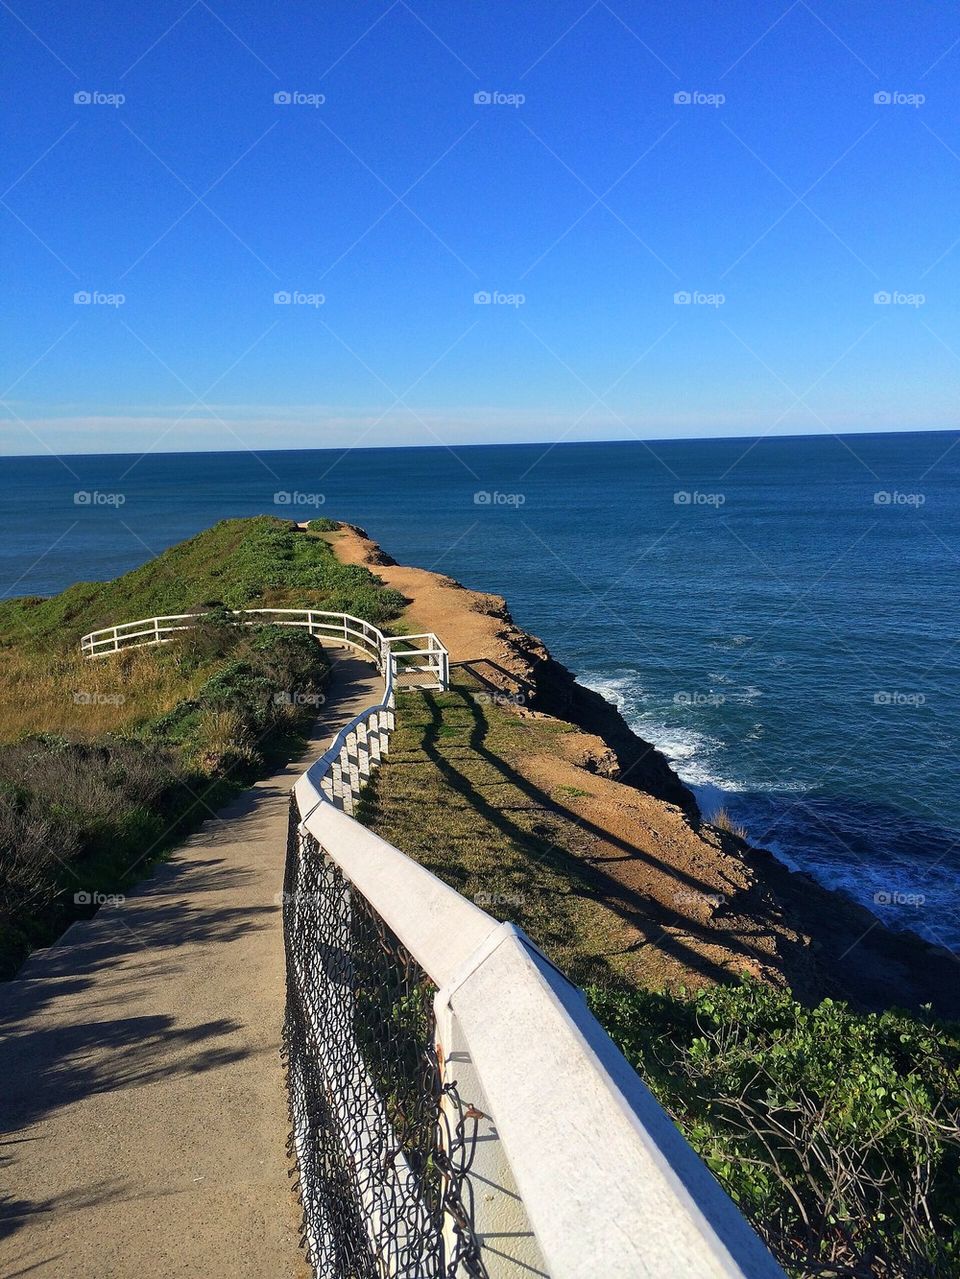 Ocean fence